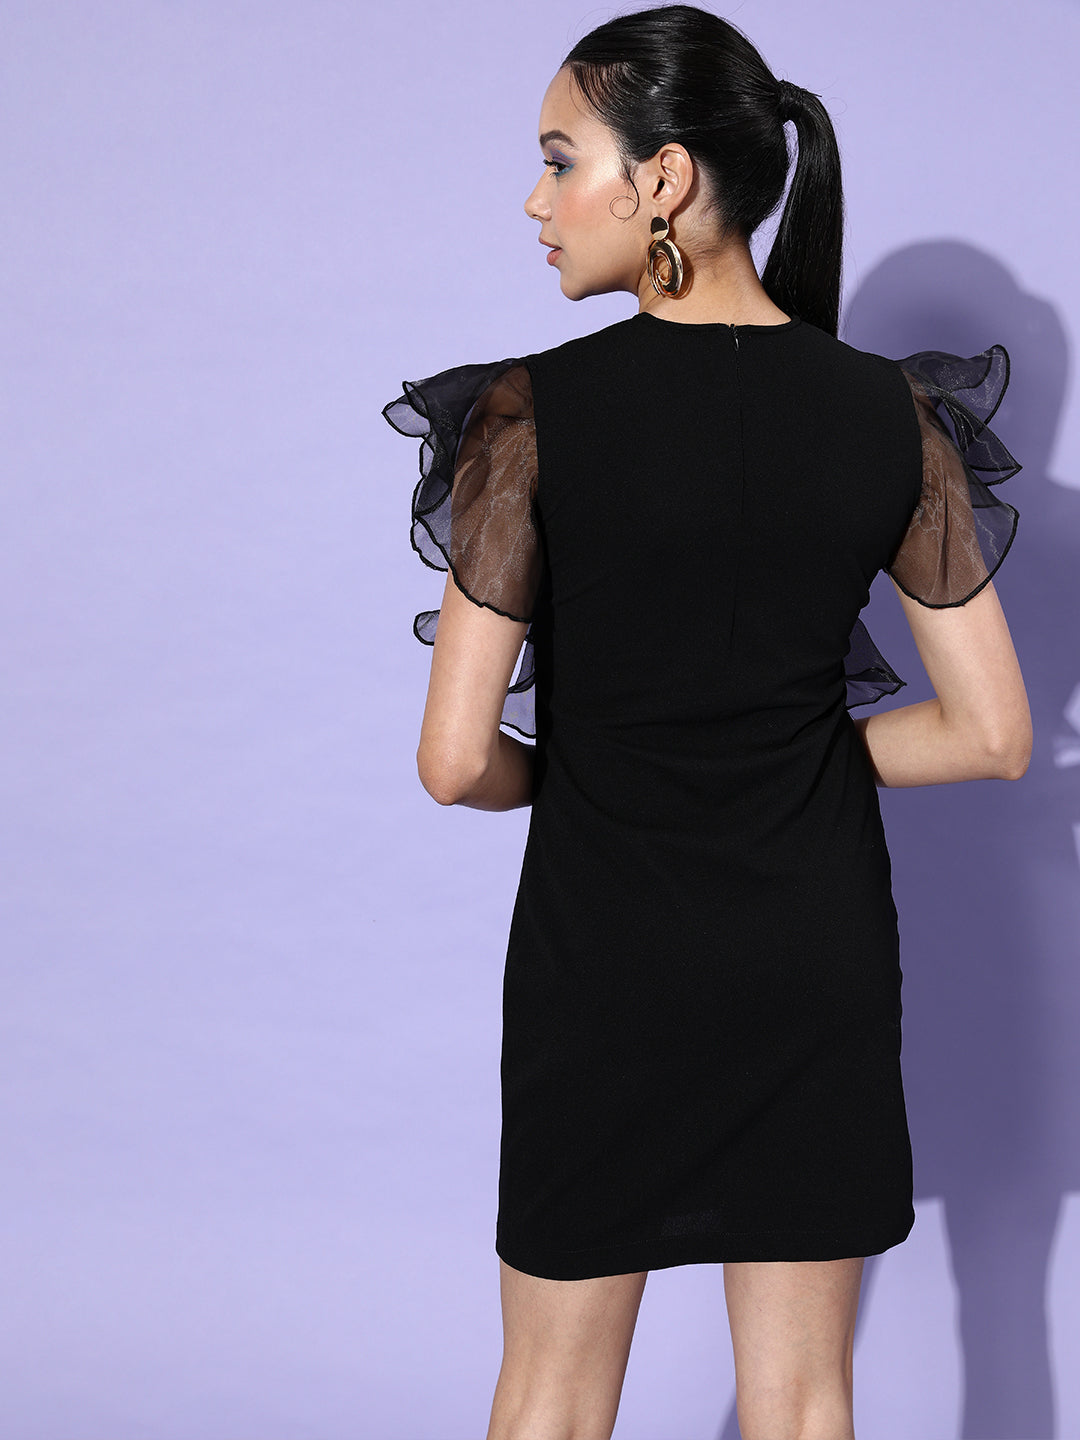 Women's Black Dress with Ruffles